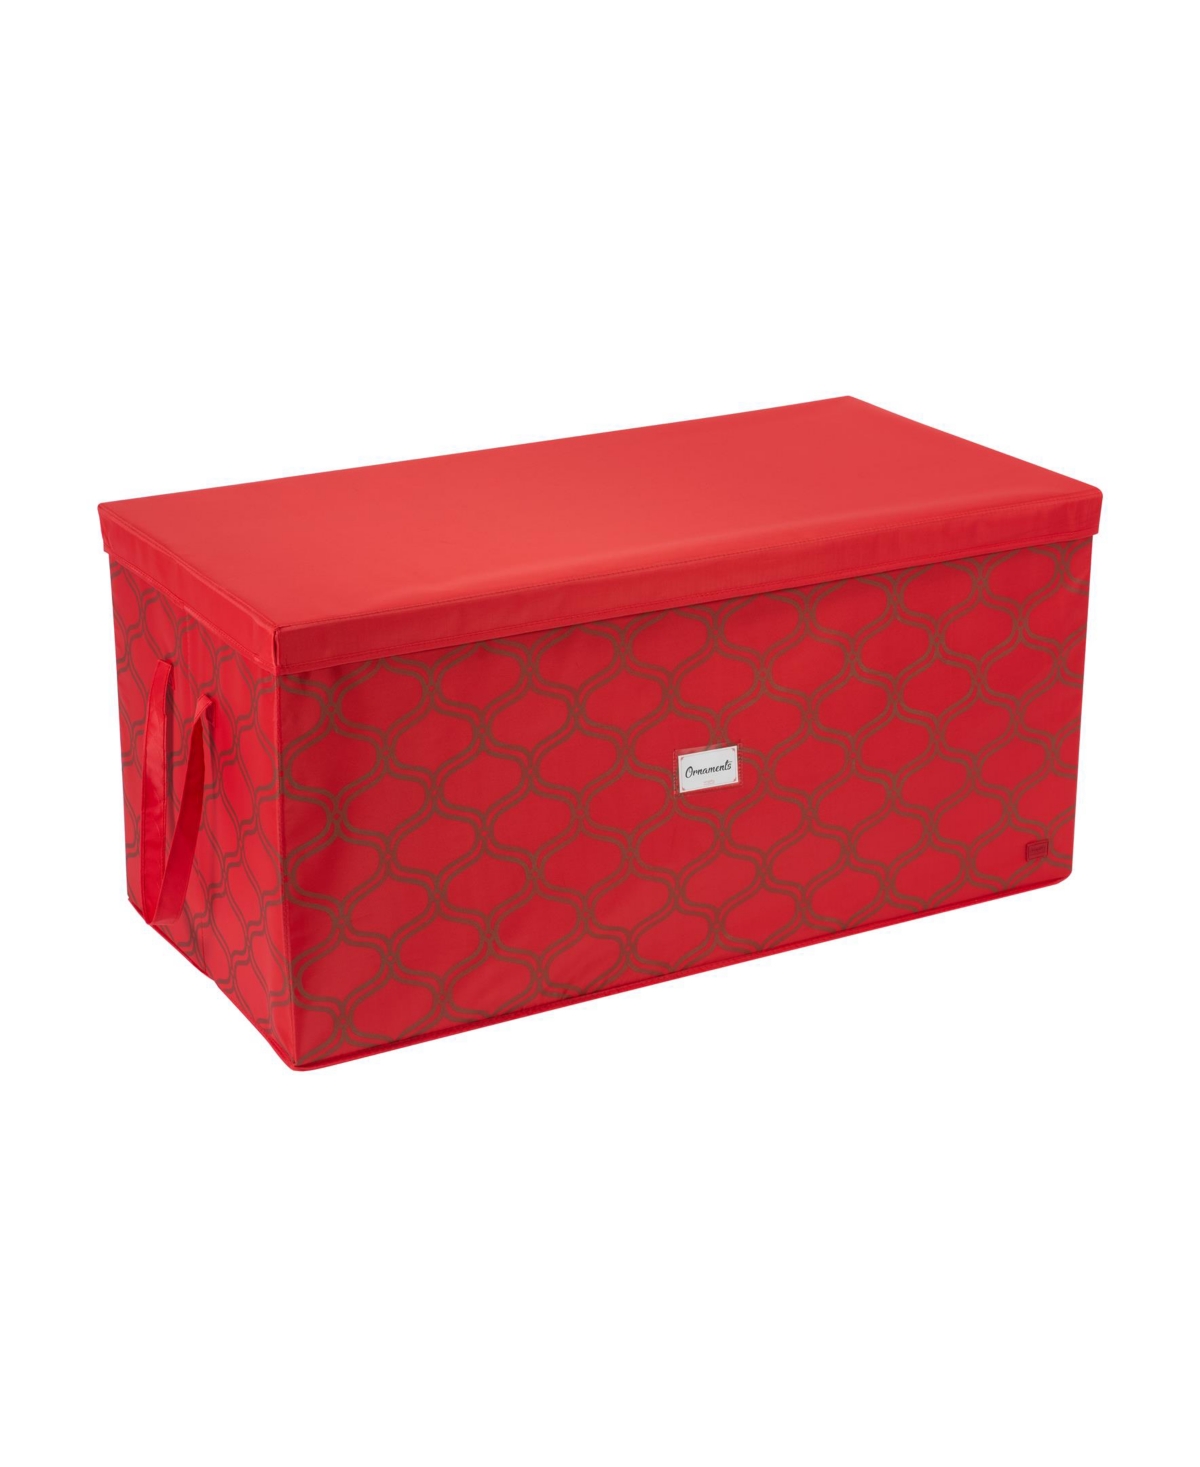 96 Ornament Storage Box - Red